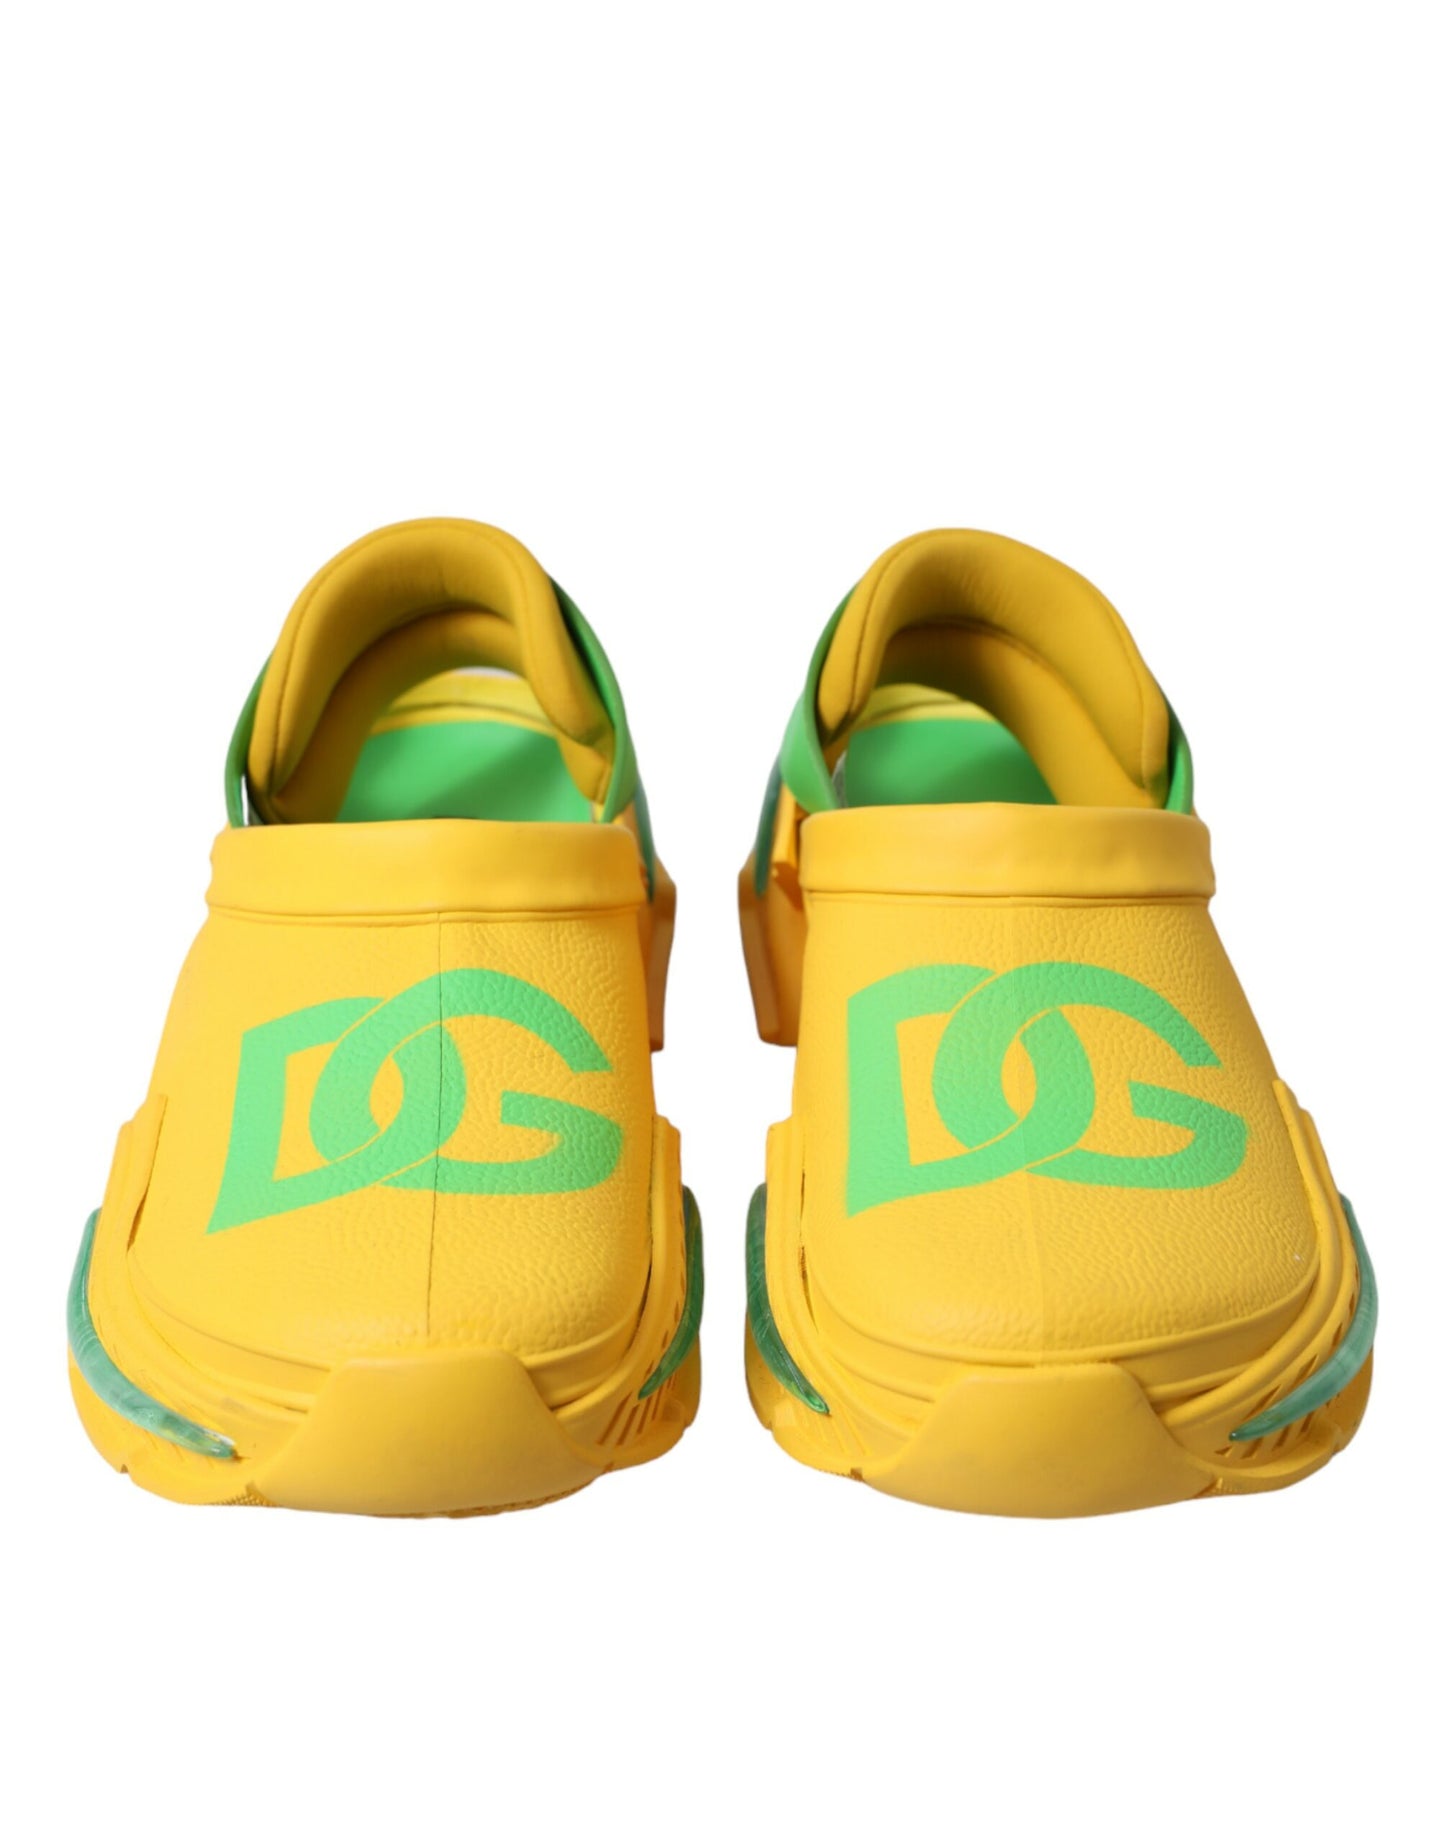 Yellow Green Rubber Clogs Men Slippers Men Shoes